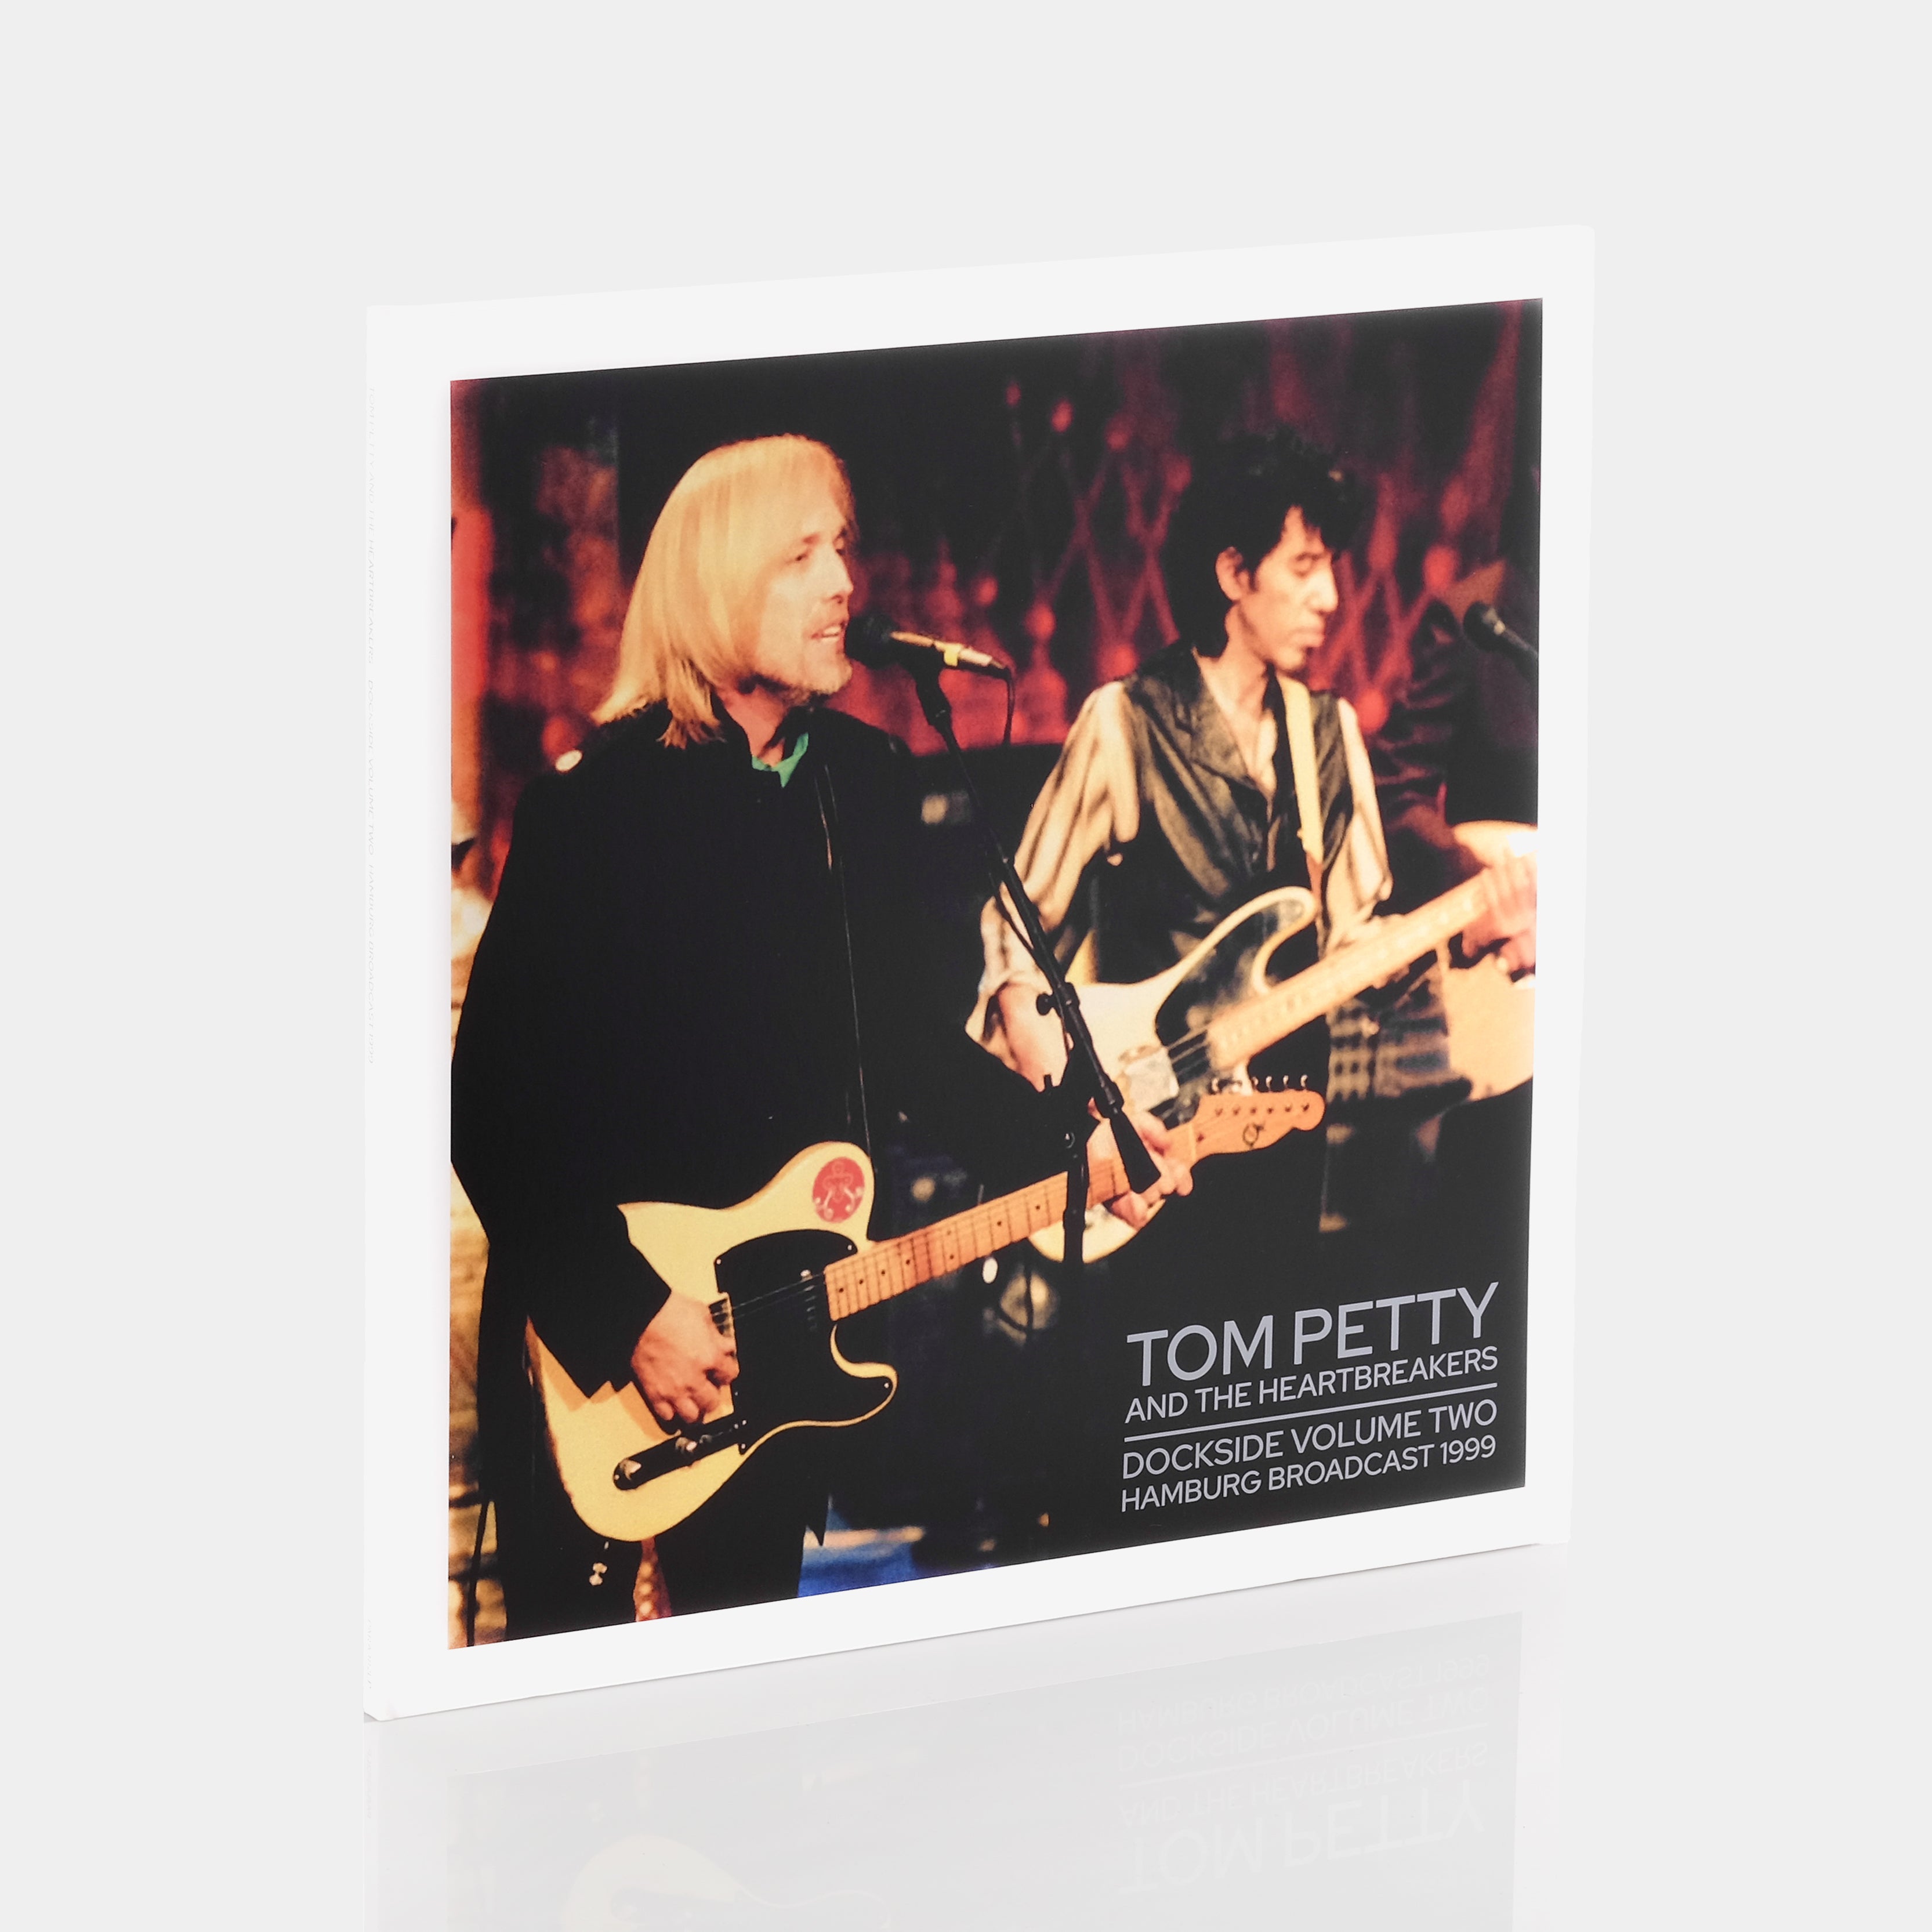 Tom Petty And The Heartbreakers - Dockside Volume Two Hamburg Broadcast 1999 2xLP Vinyl Record